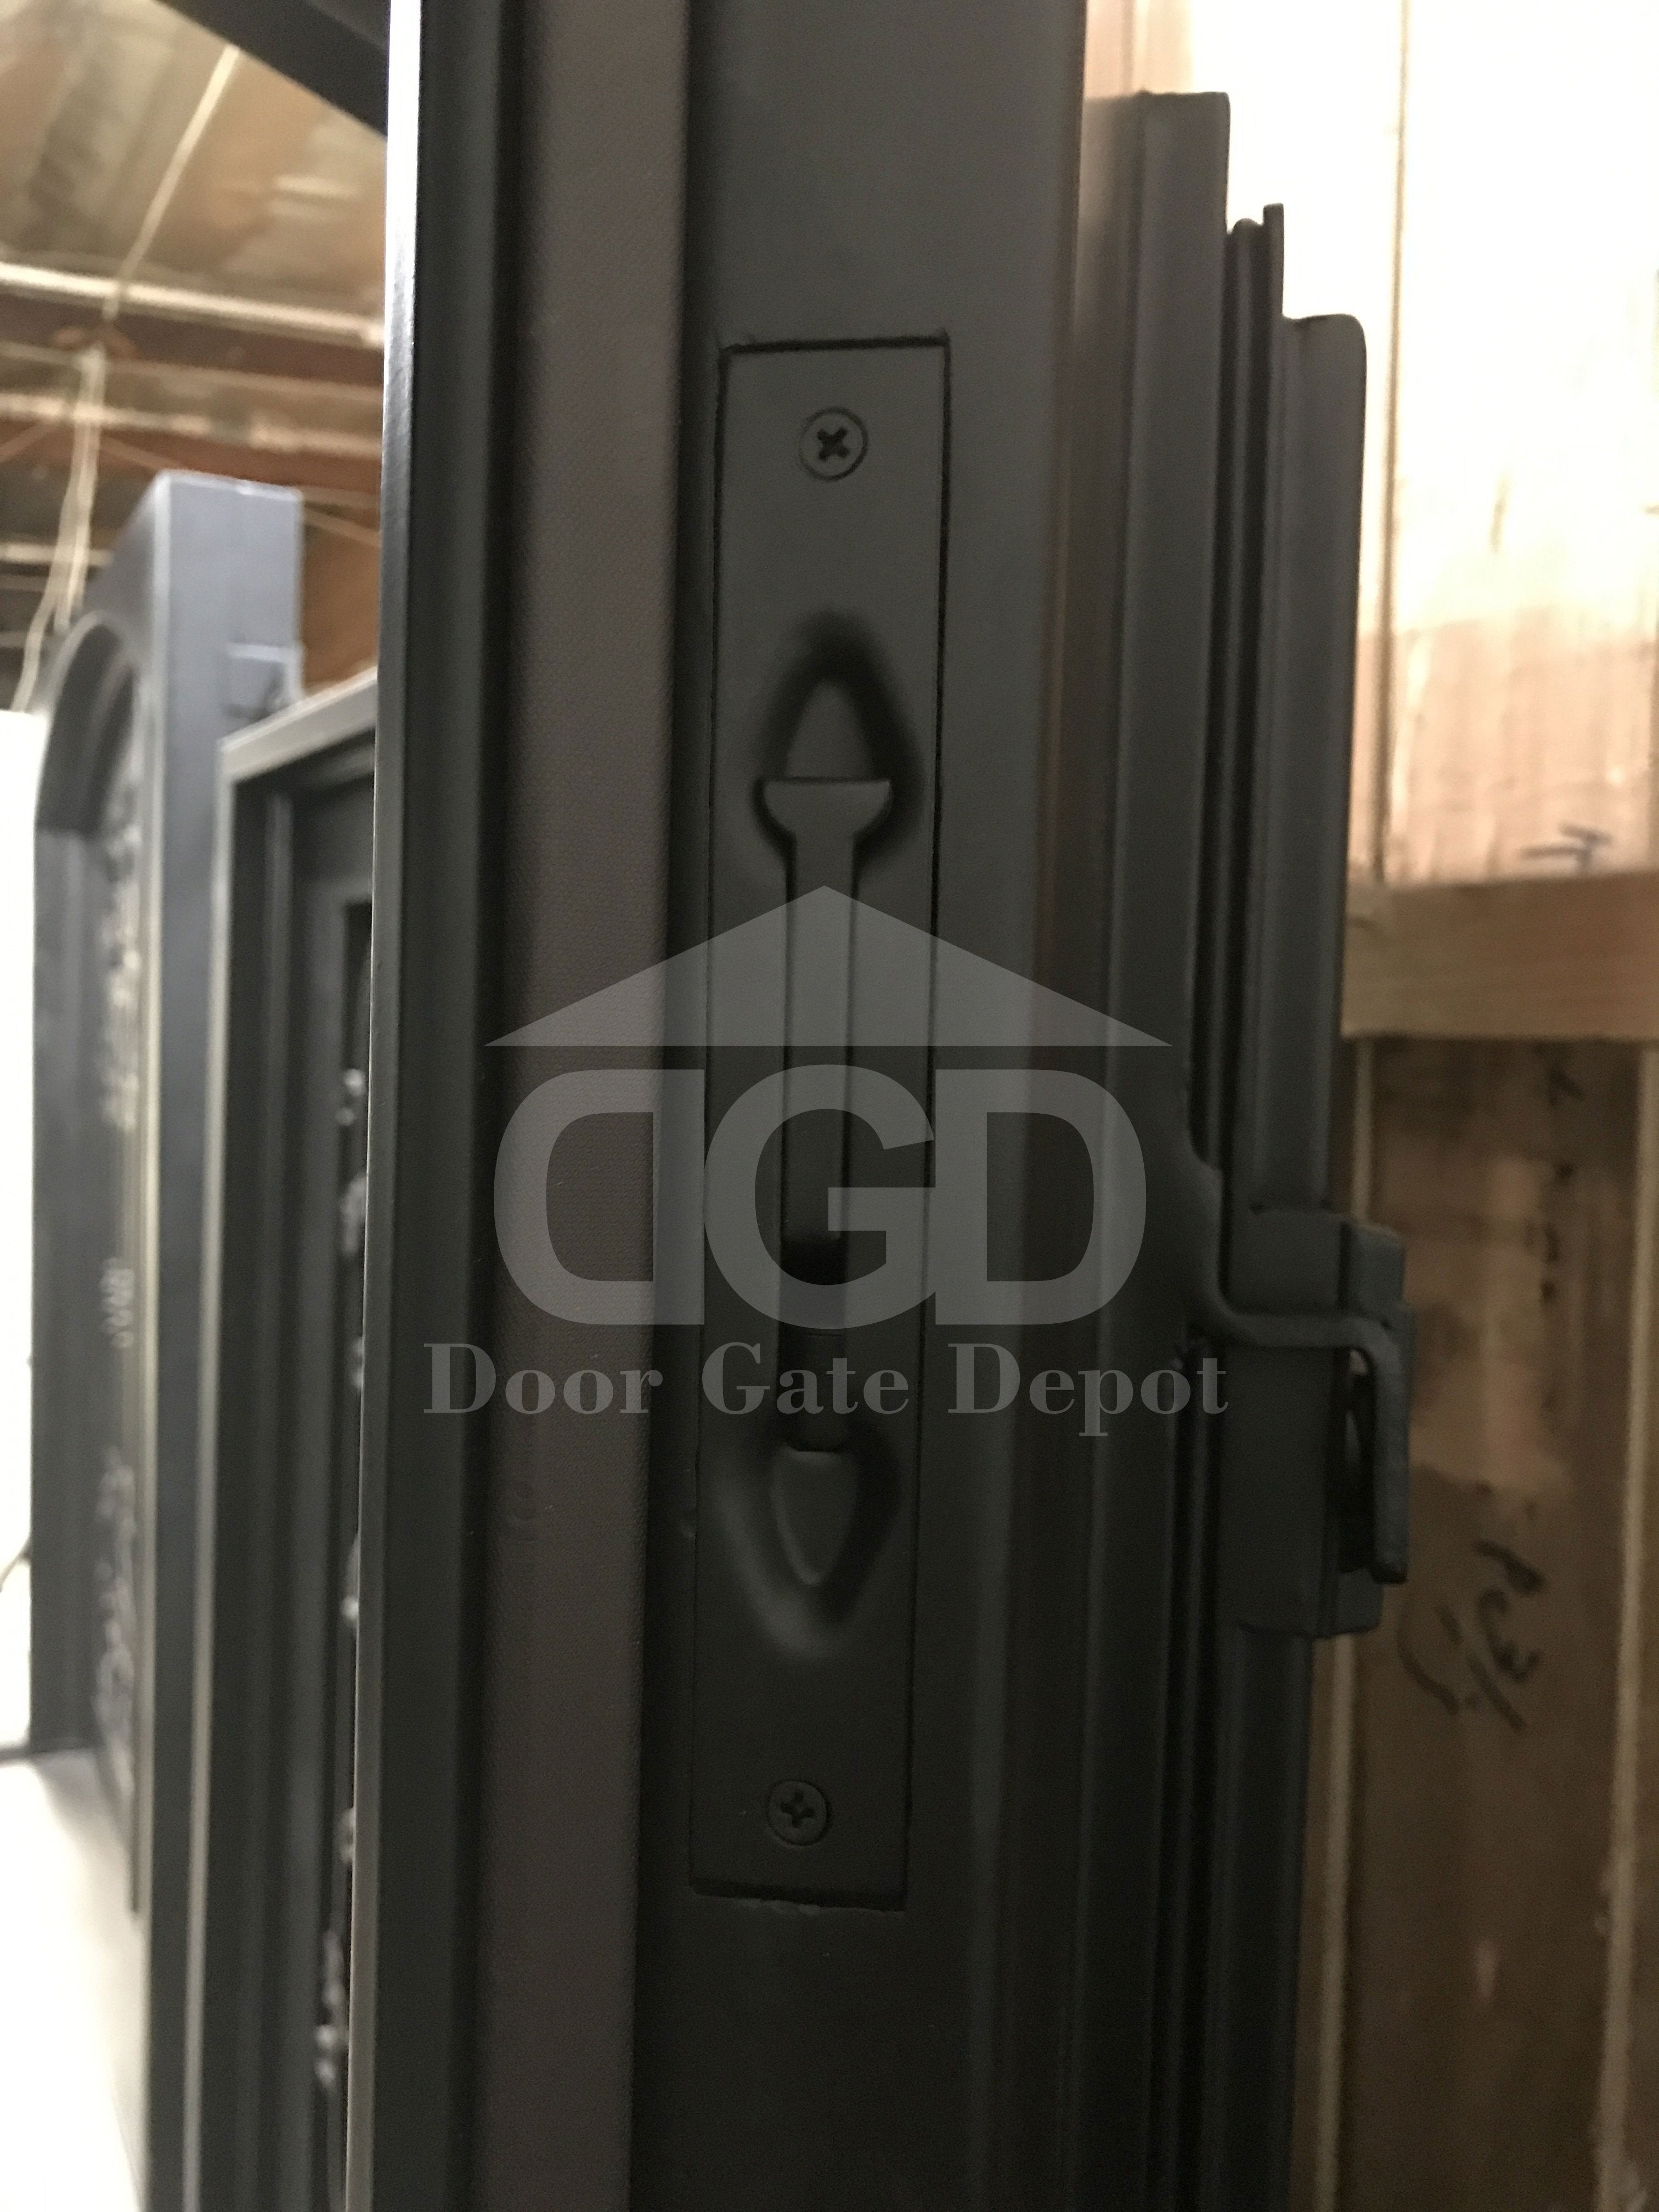 JASMINE- flat top, prehung, dual tempered insulated glass, bug screens, wrought iron doors-72x81 Right Hand - Door Gate Depot